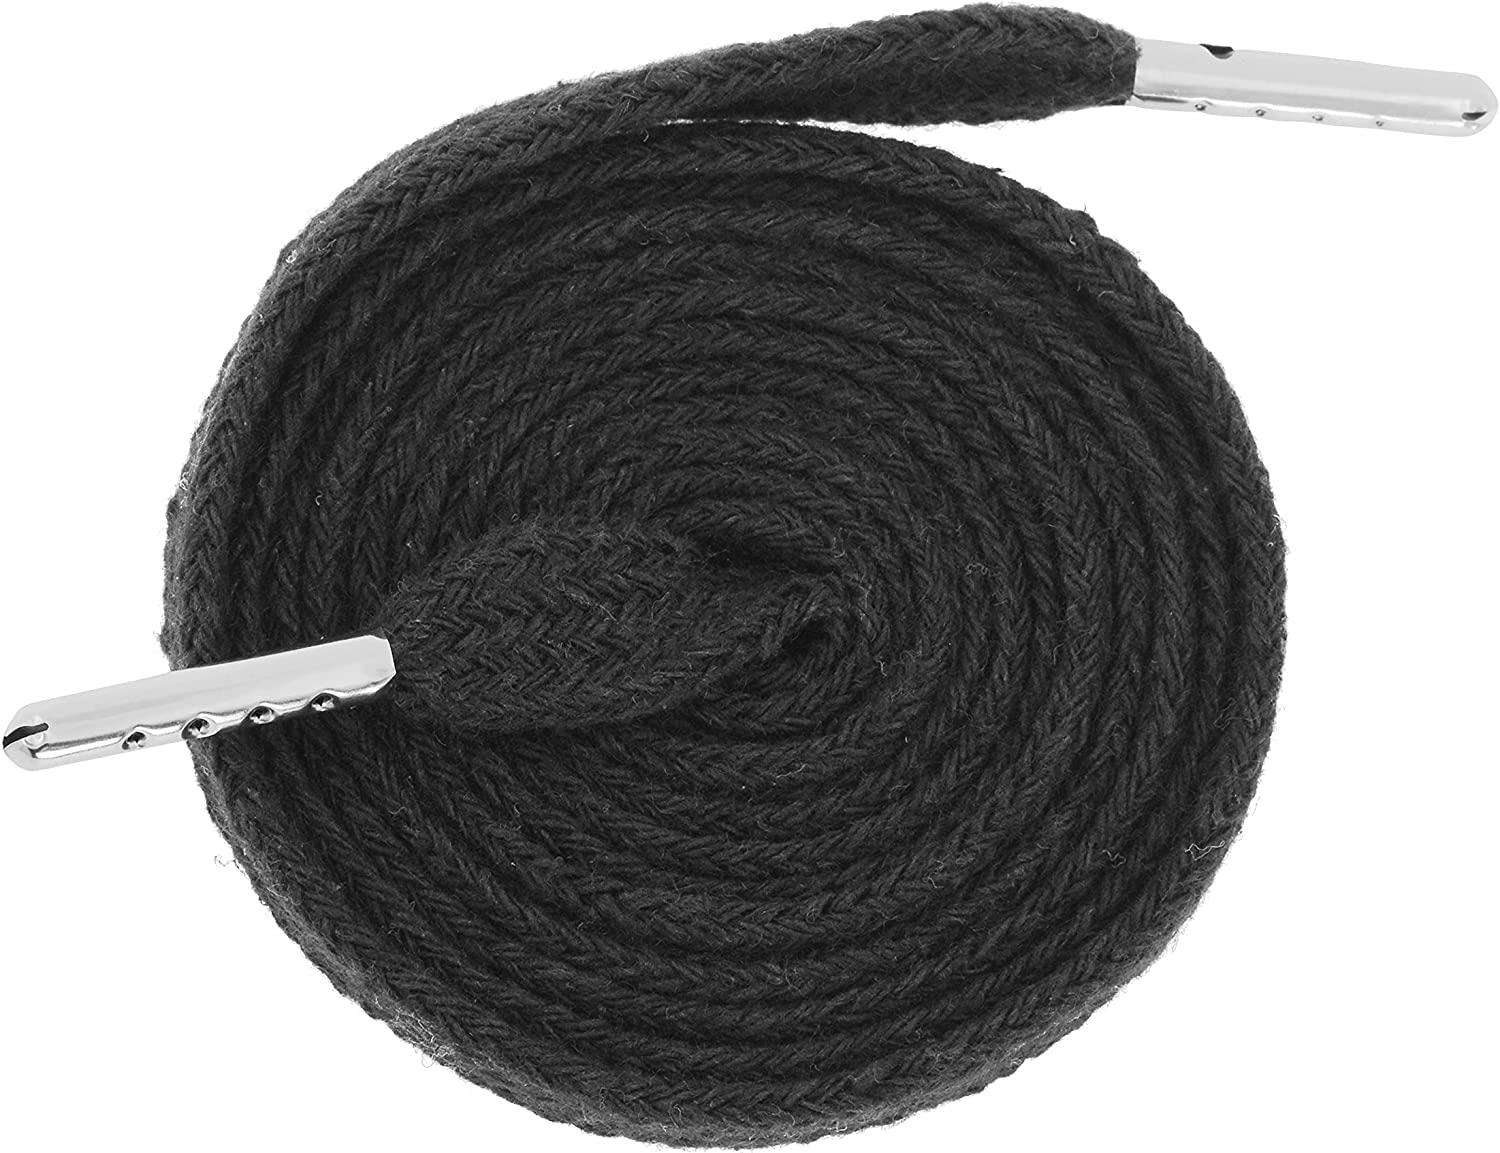 Mandala Crafts Black Flat Drawstring Cord Drawstring Replacement